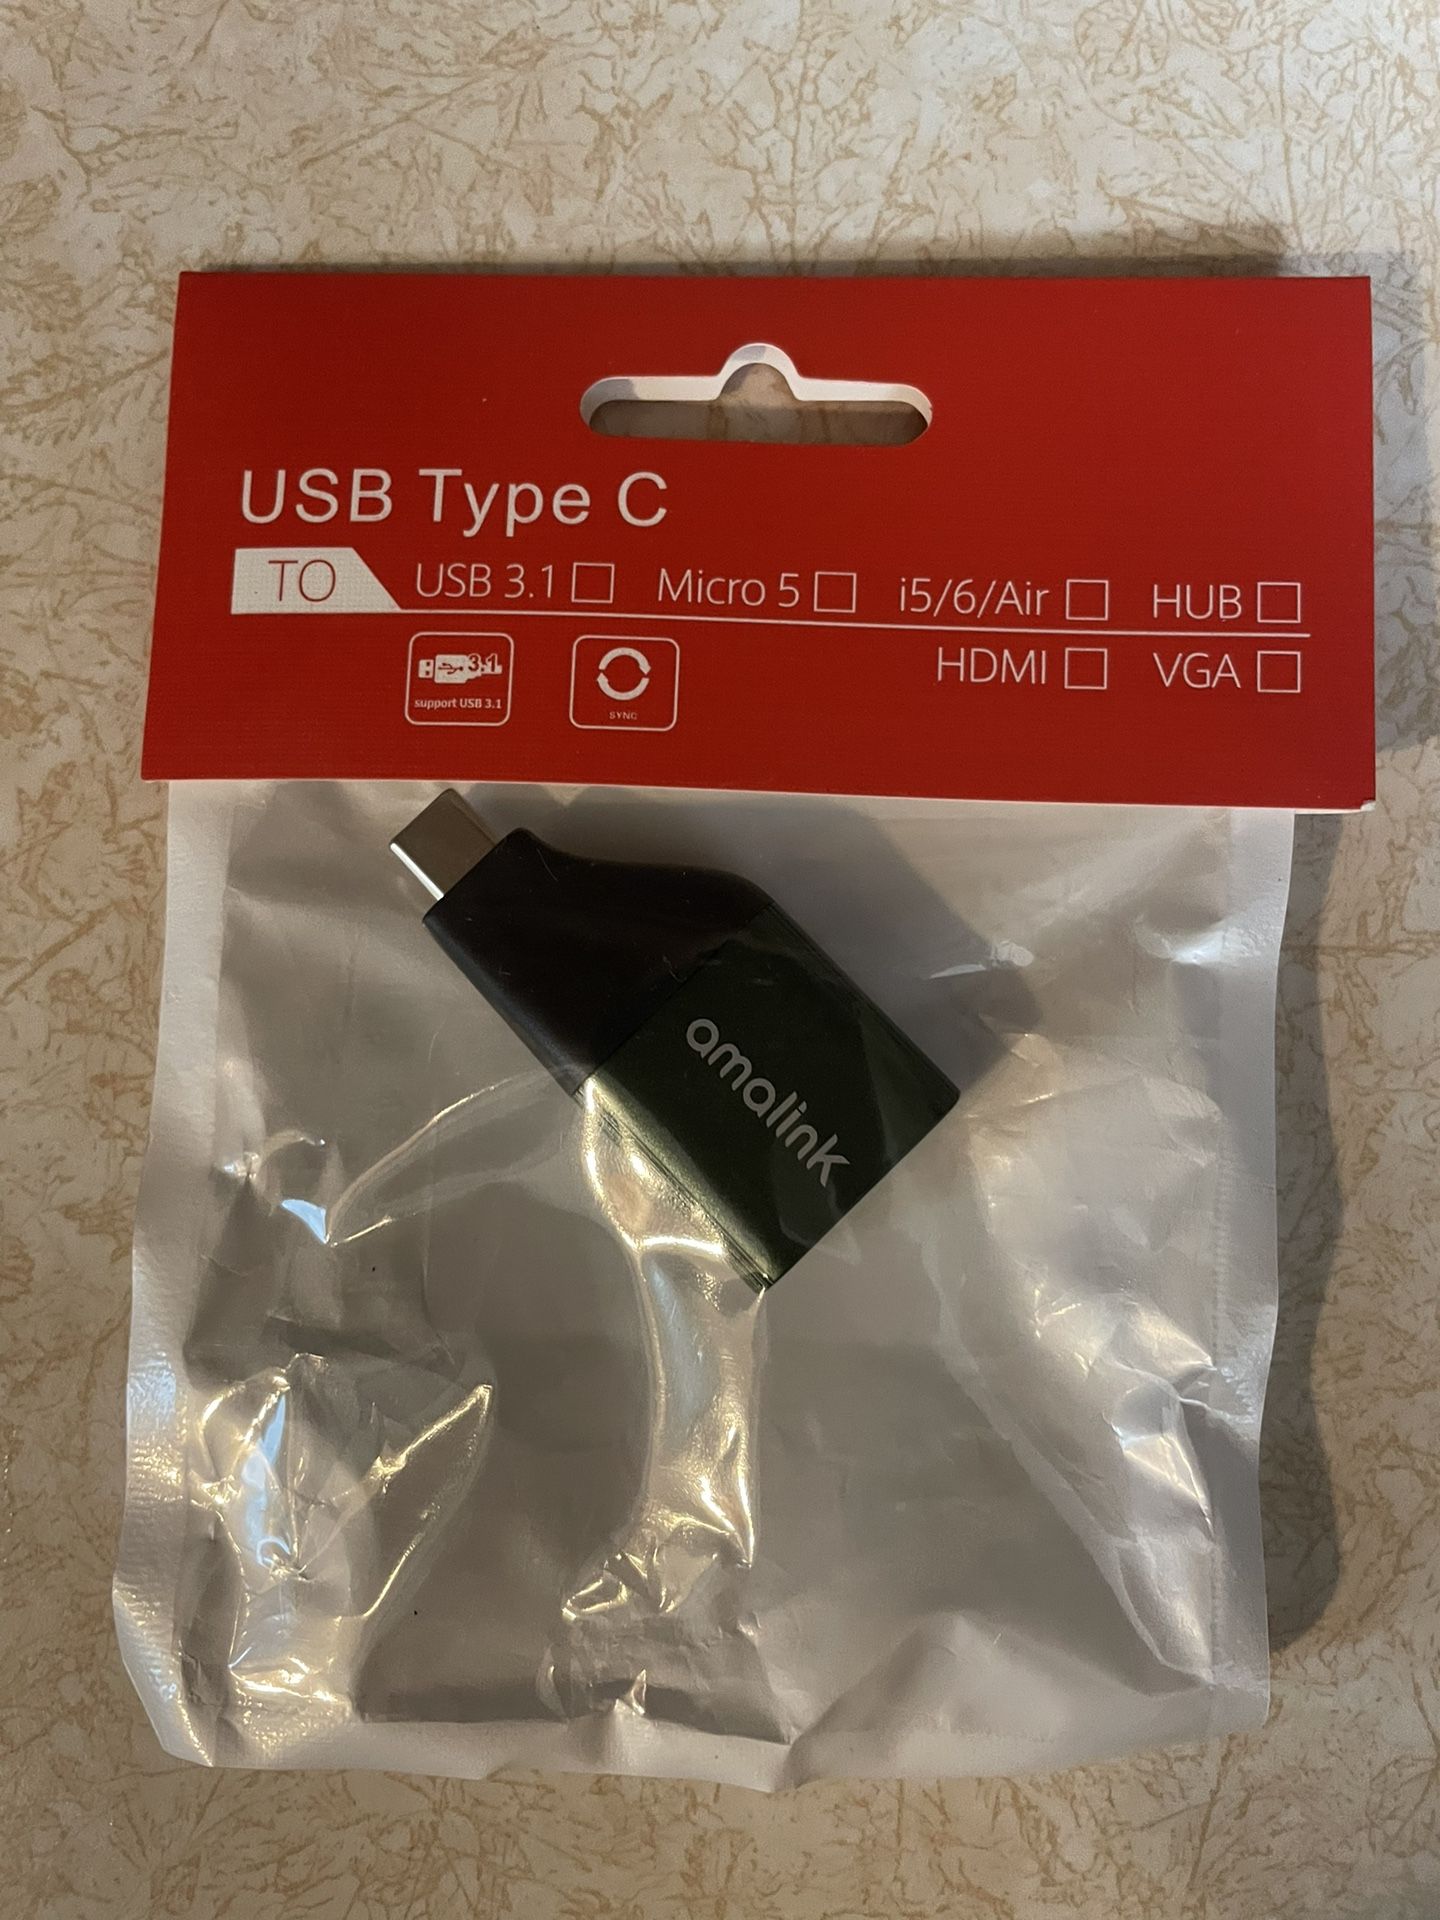 Amalink USB C To VGA Adapter 1080p @ 60hz